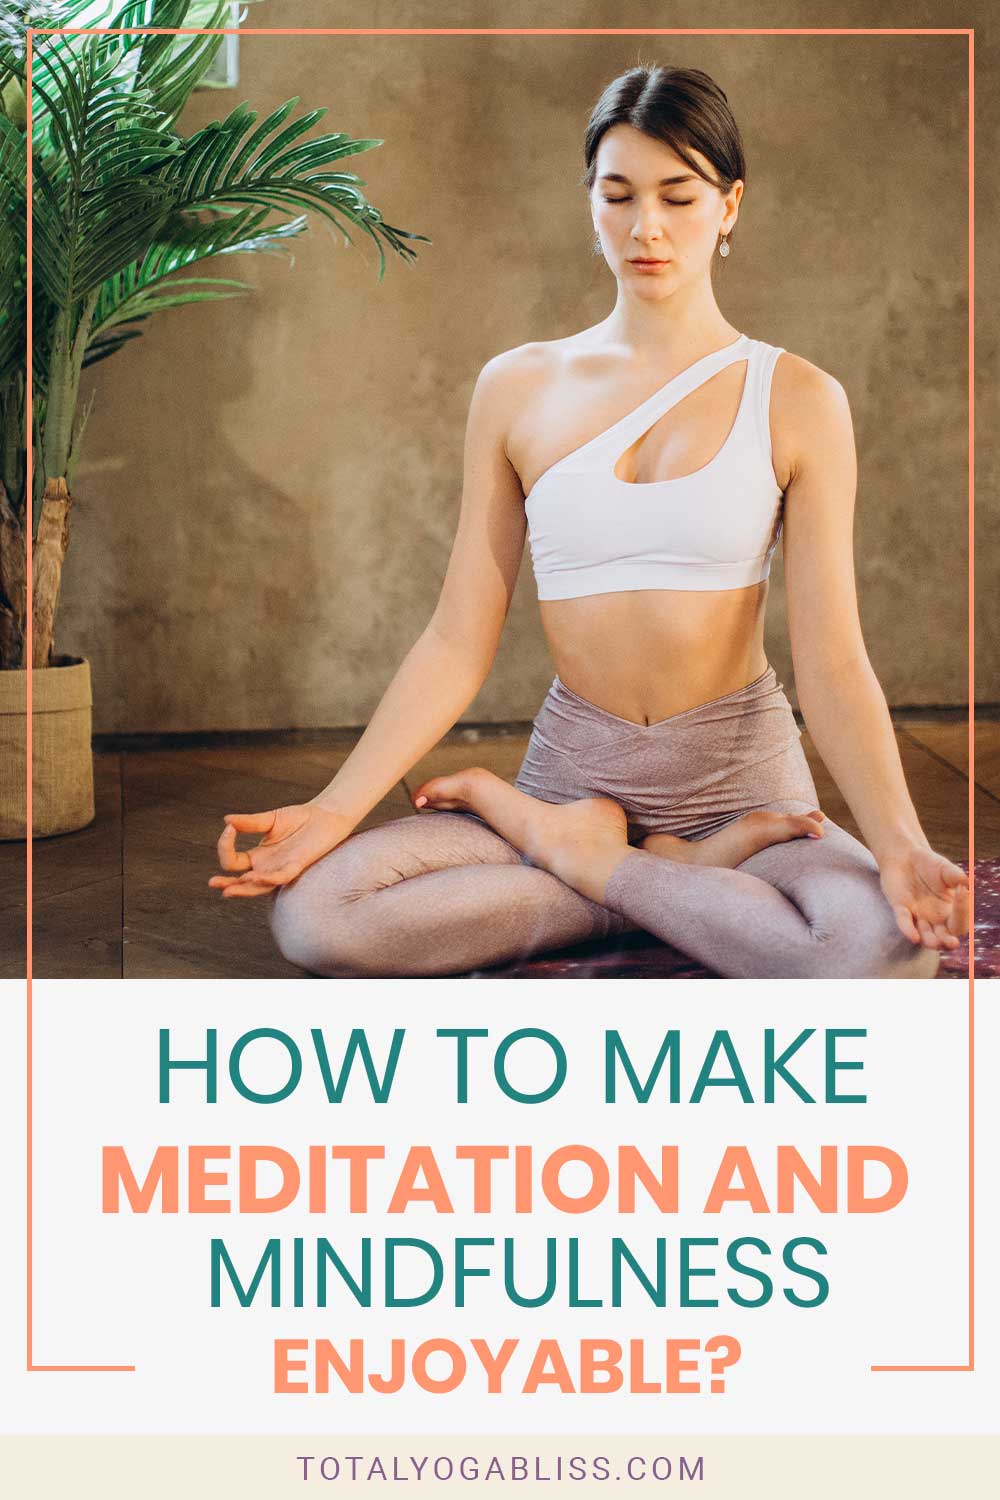 How to Make Meditation and Mindfulness Enjoyable?